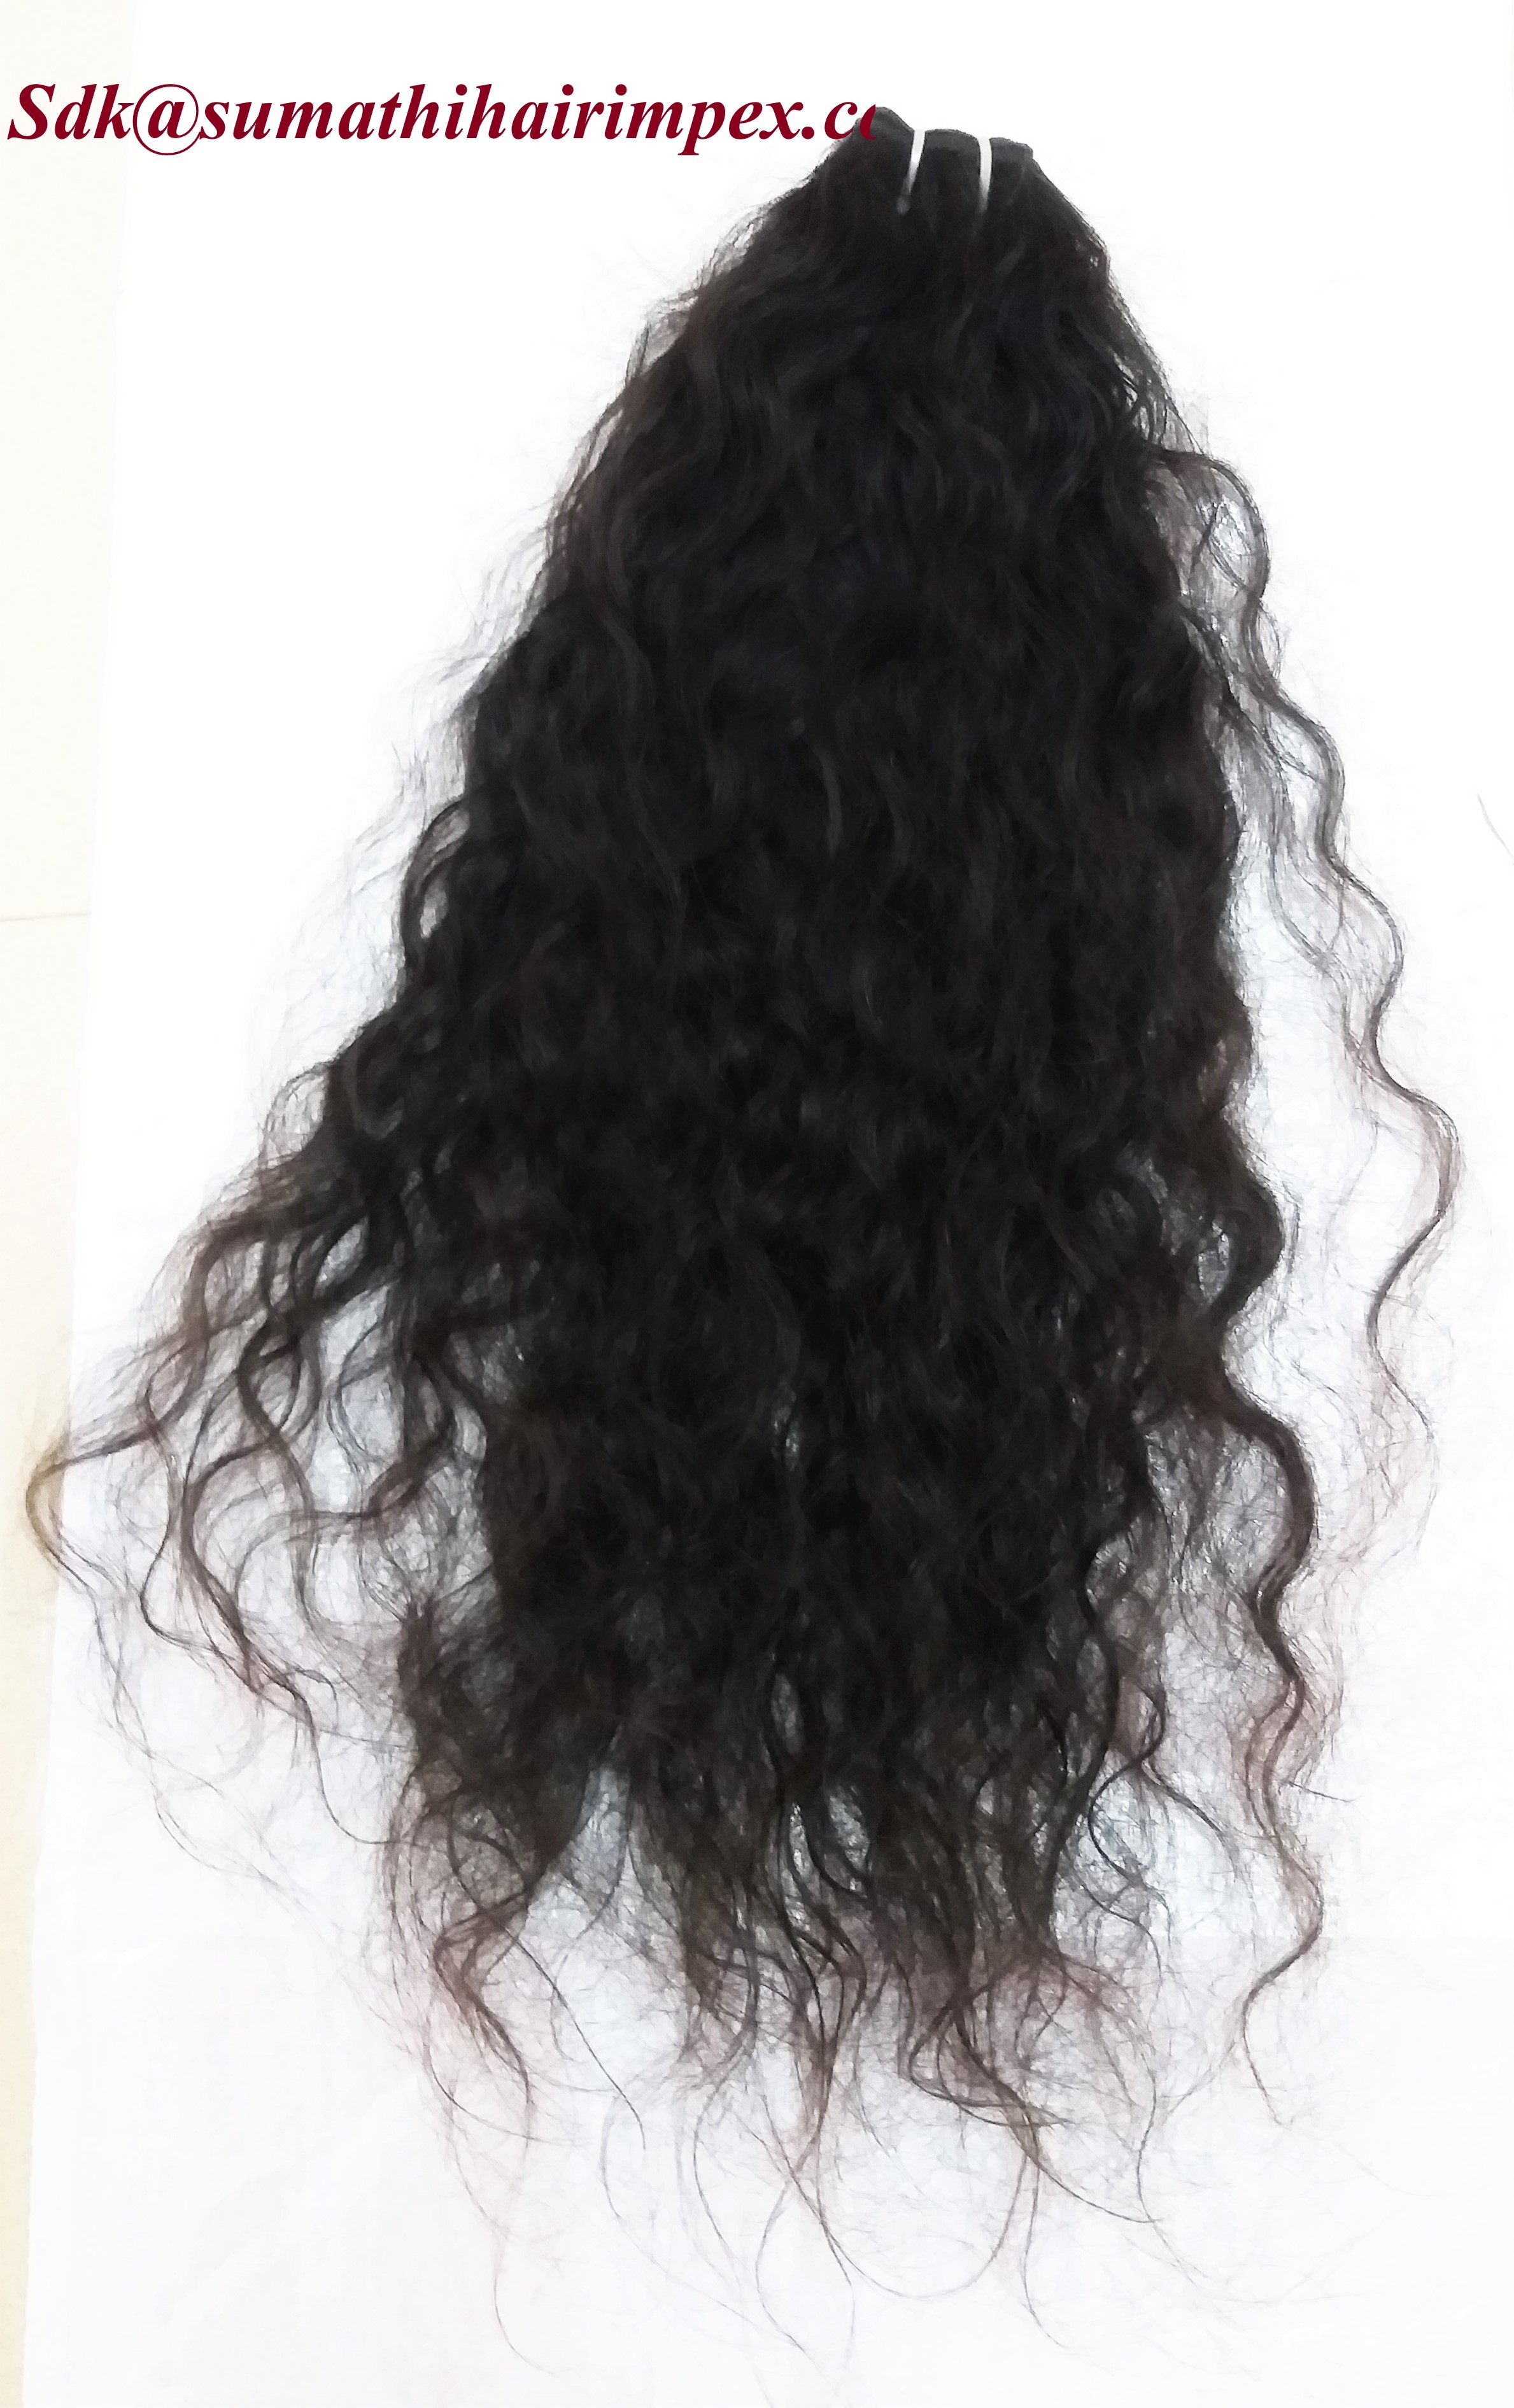 Indian Curl Pride hair Extensions